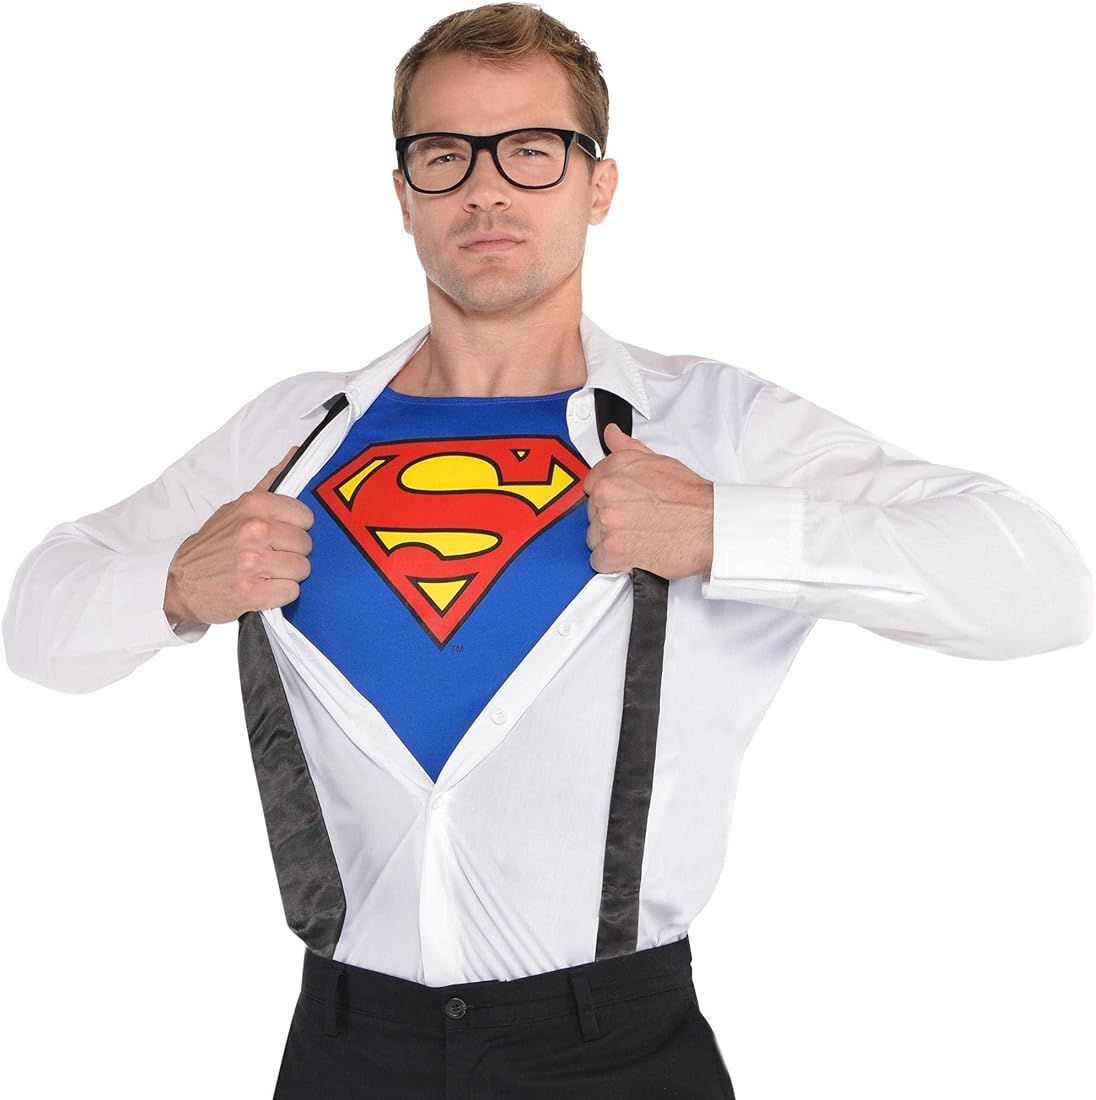 Suit Yourself Clark Kent Halloween Costume for Men, Superman, Standard Size, with Shirt, Glasses ... | Amazon (US)